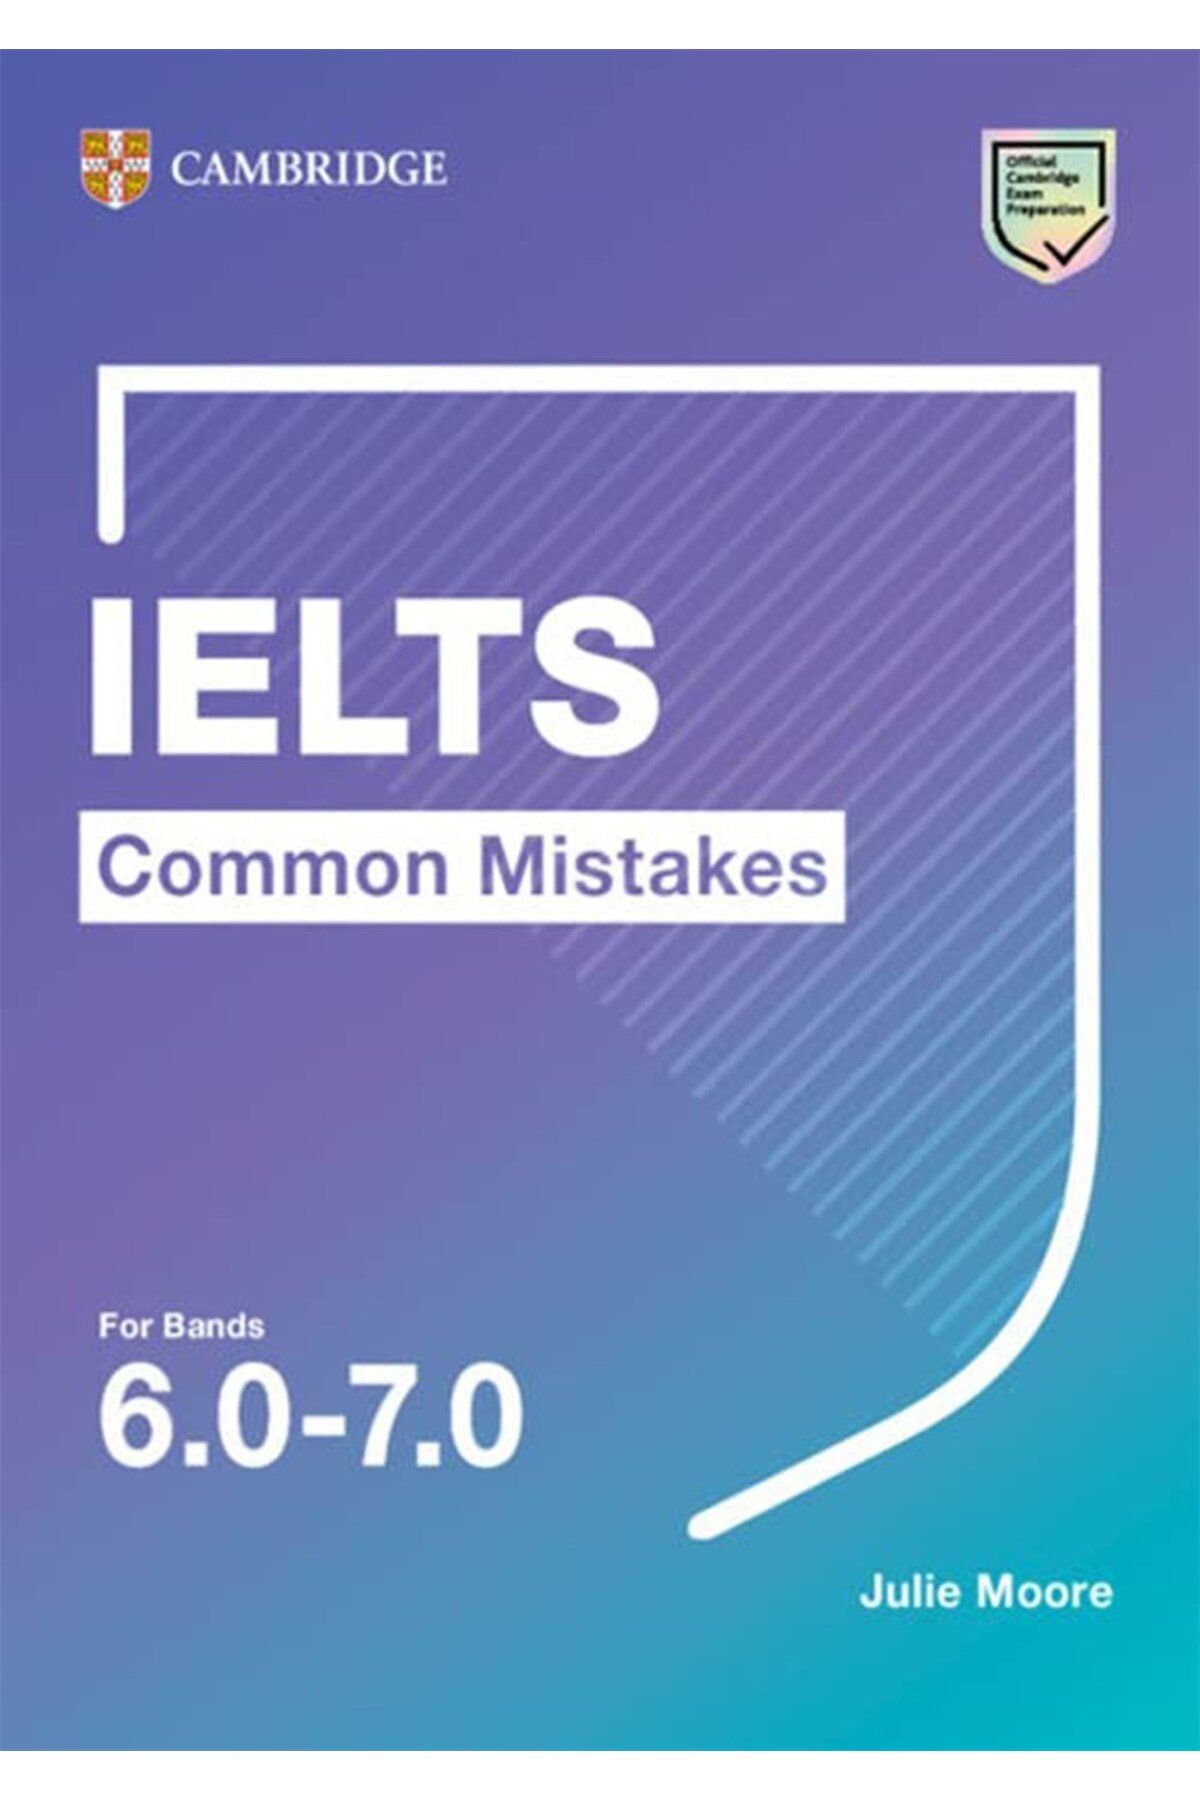 Cambridge University IELTS Common Mistakes For Bands 6.0-7.0. Advanced